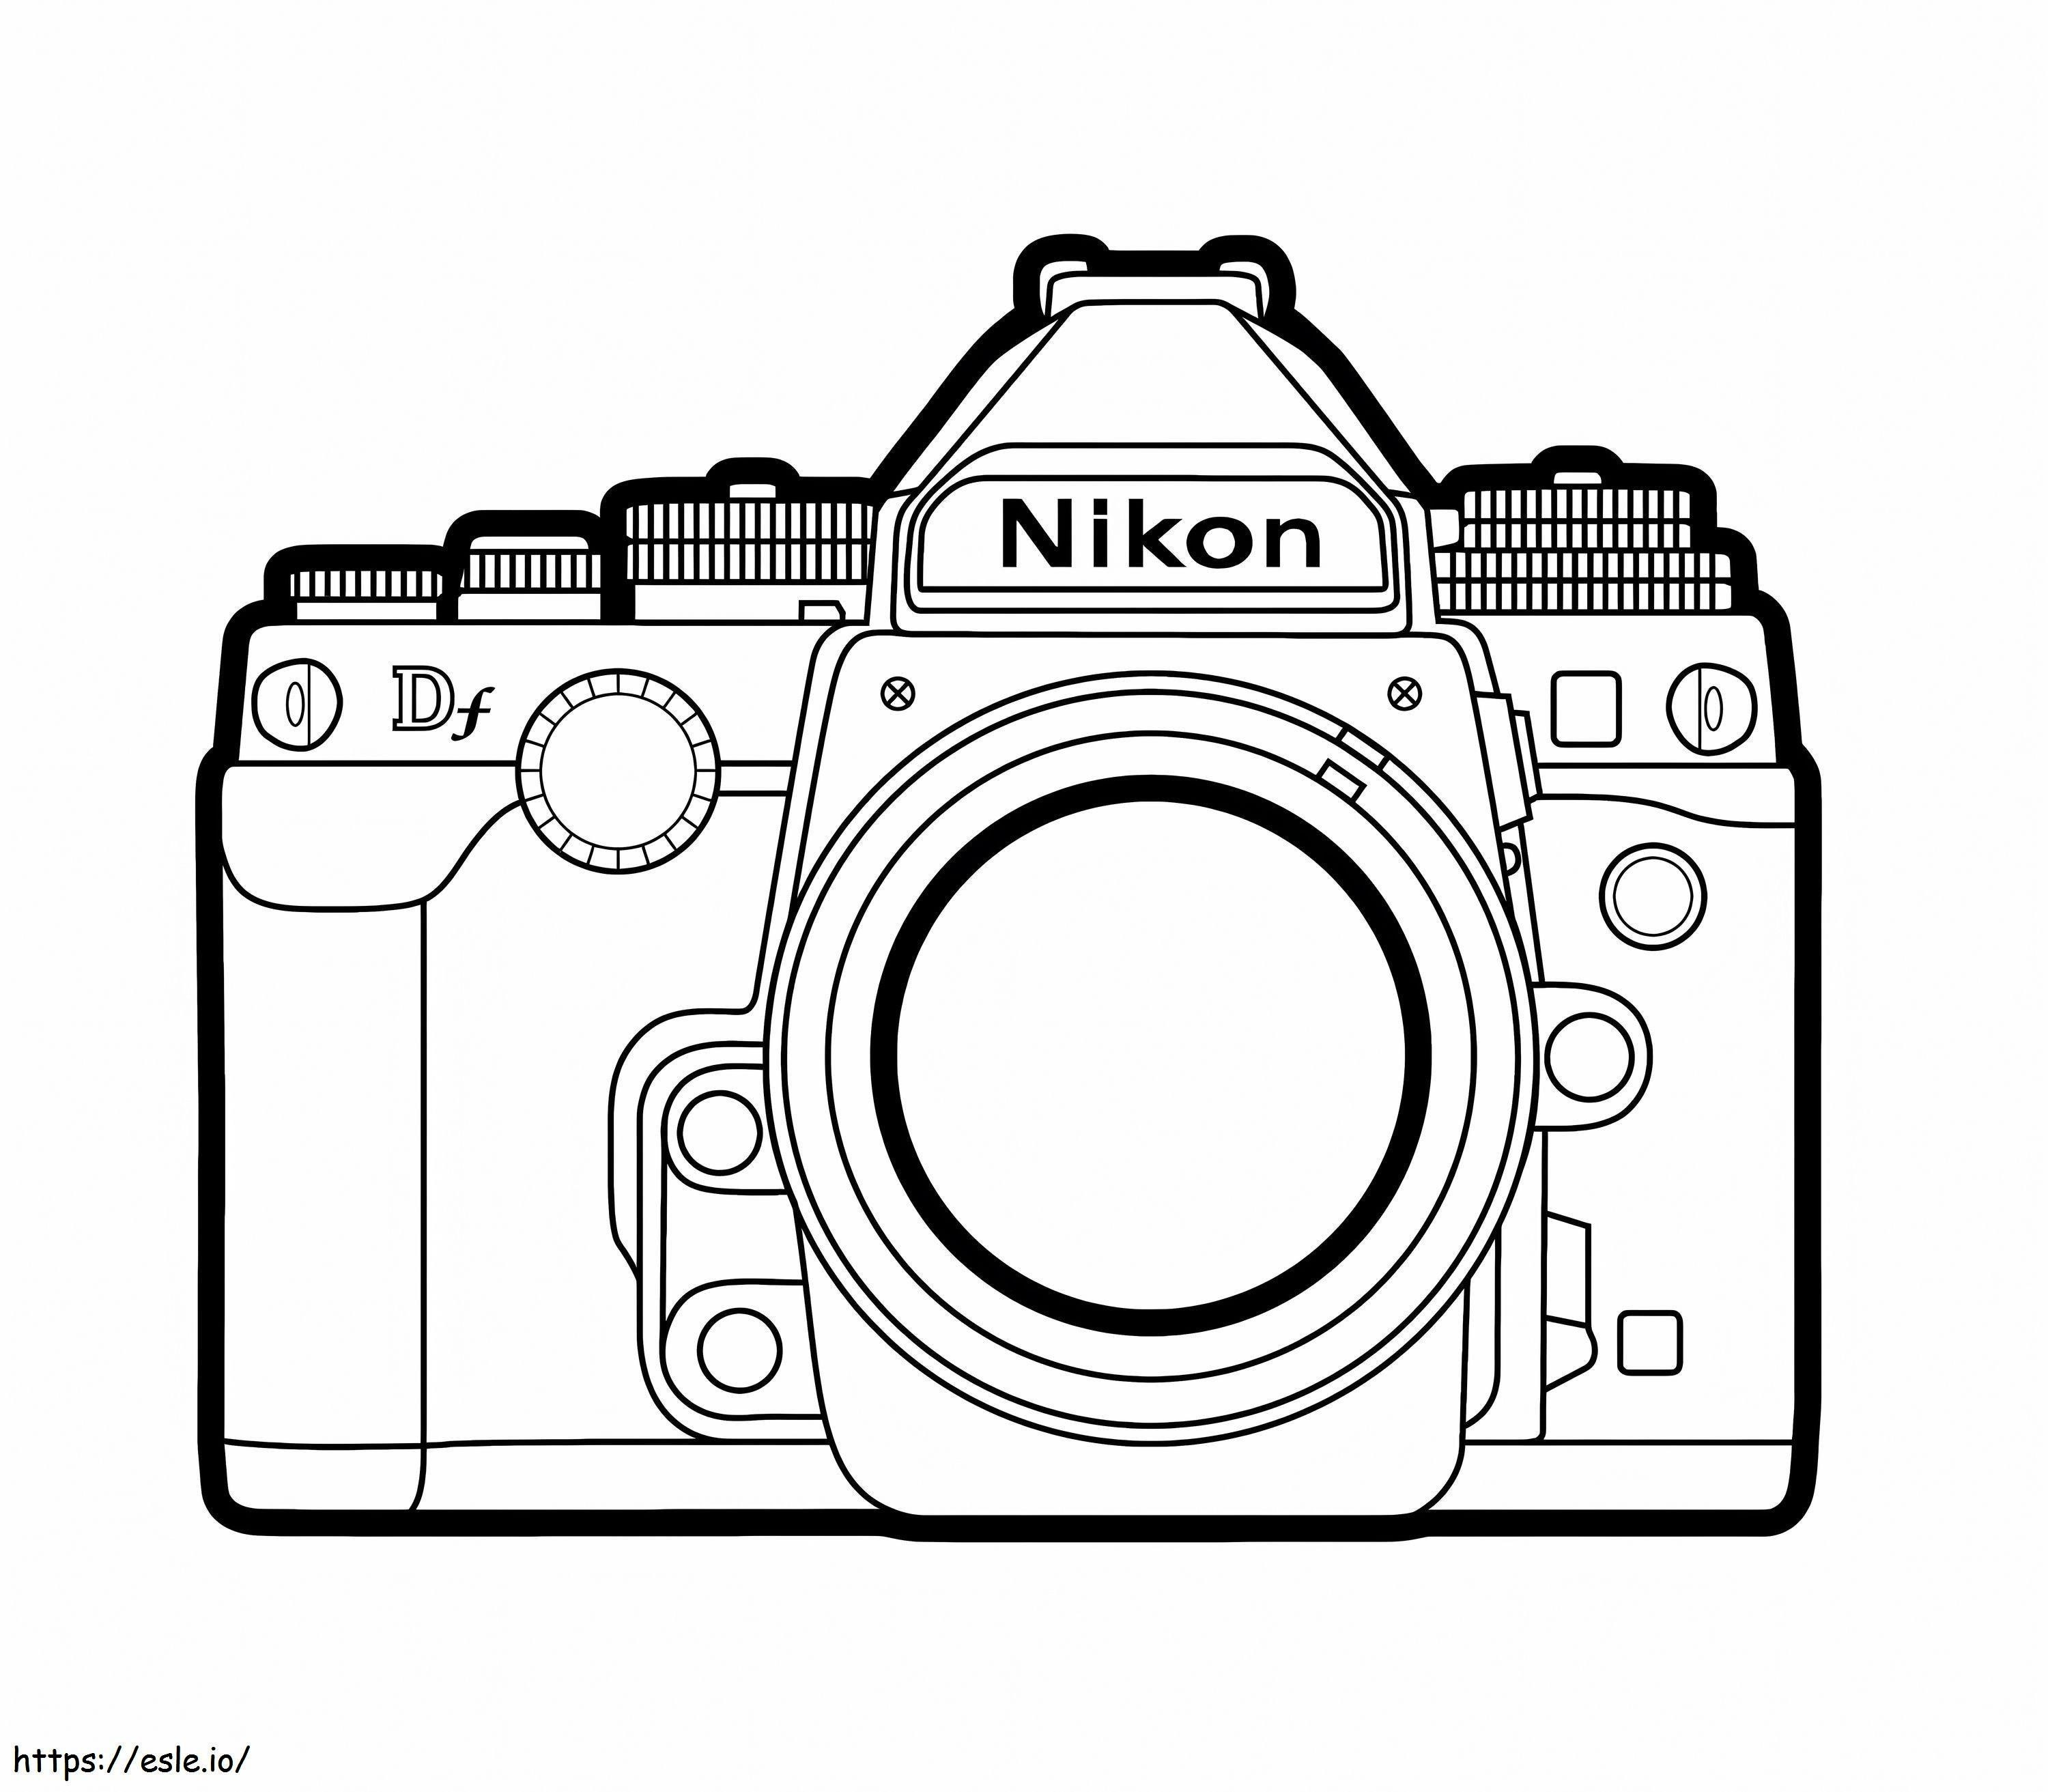 Nikon Camera coloring page